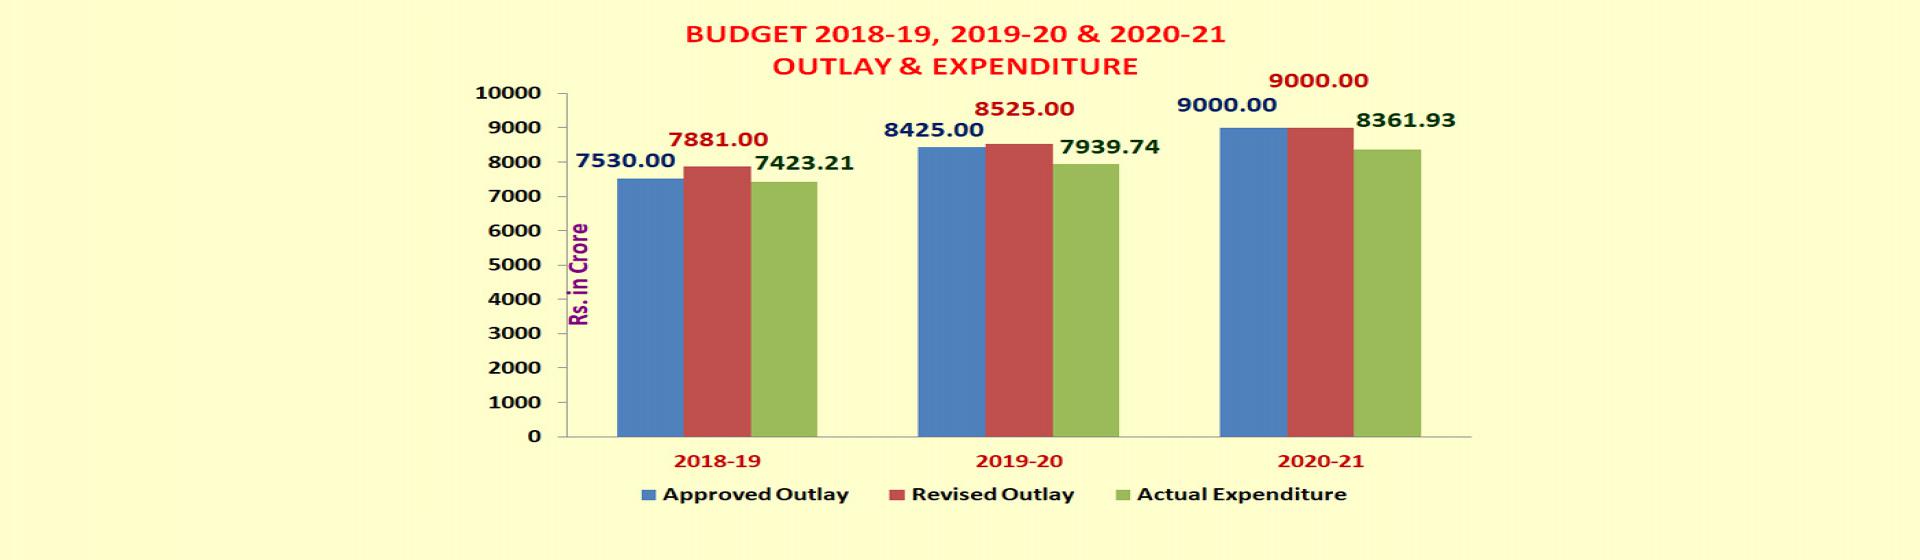 Budget 2018-19, 2019-20 & 2020-21